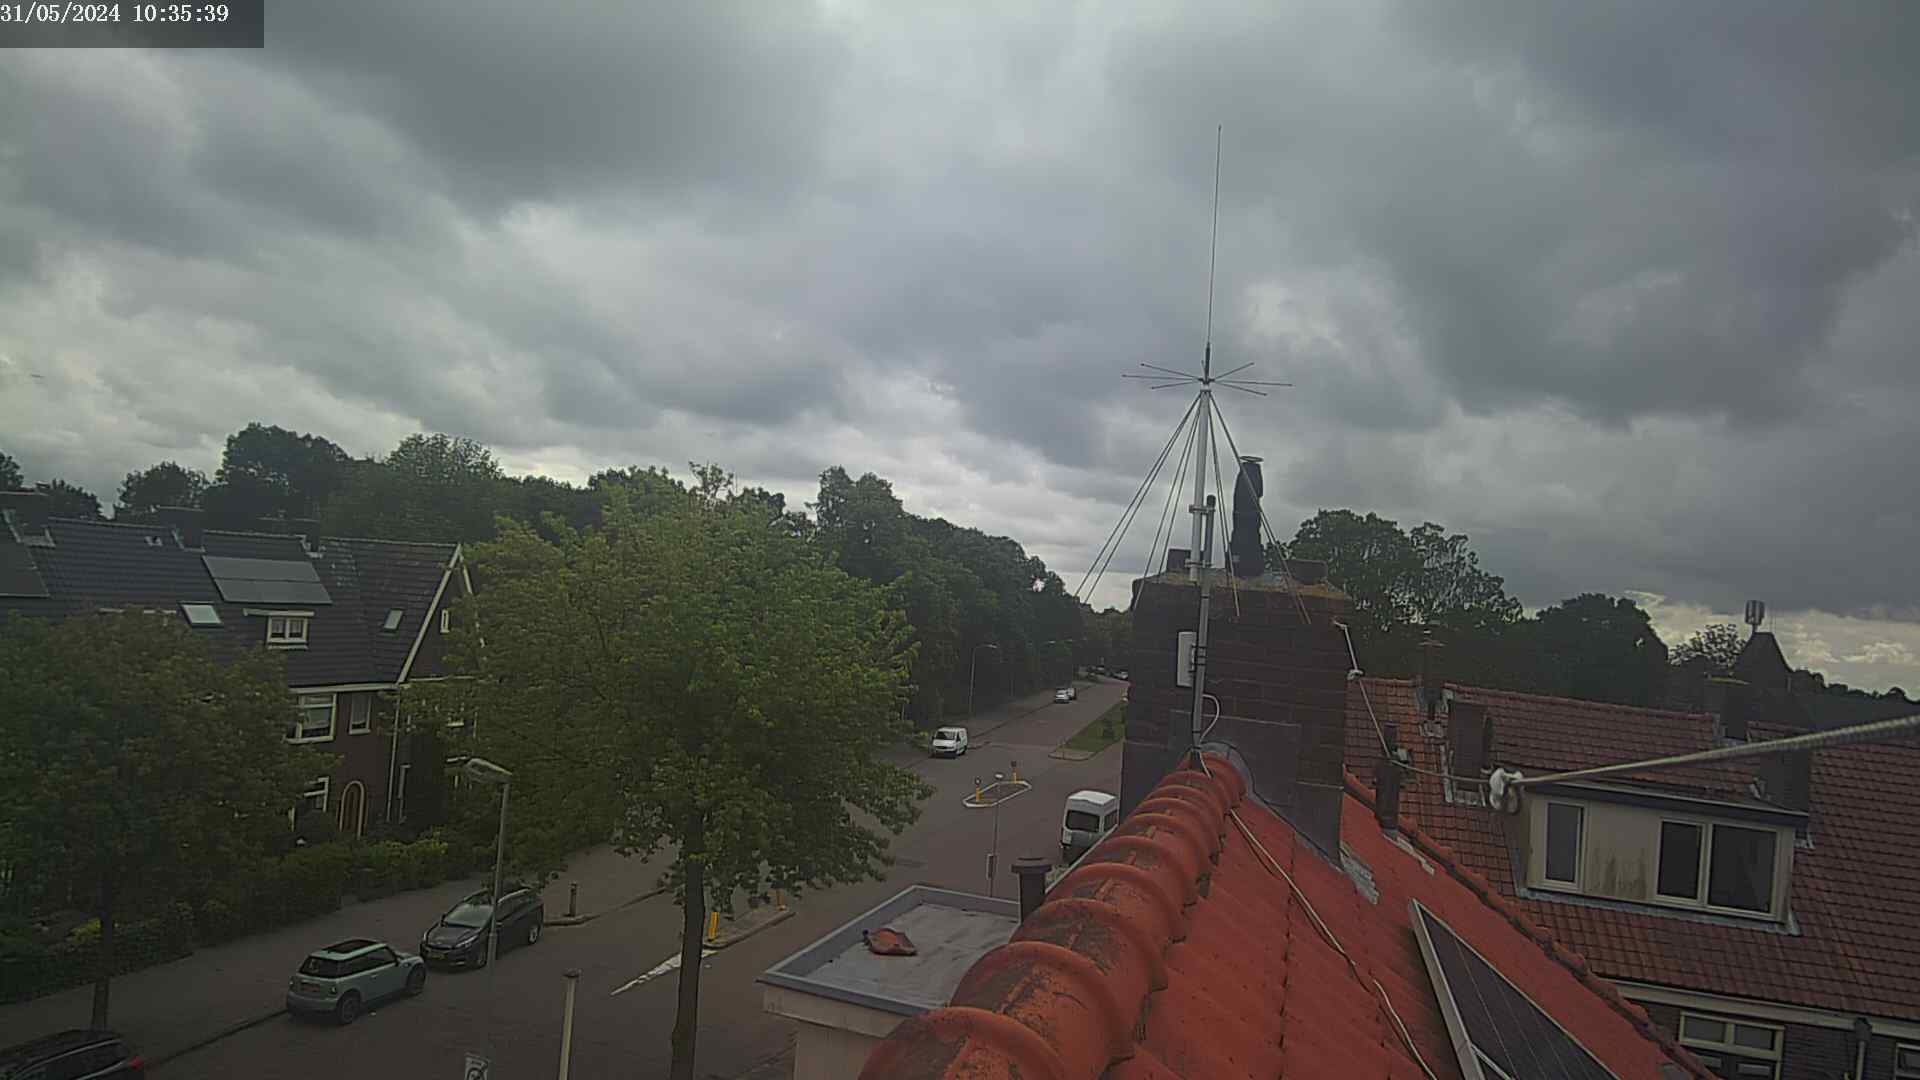 Haarlem Dom. 11:35